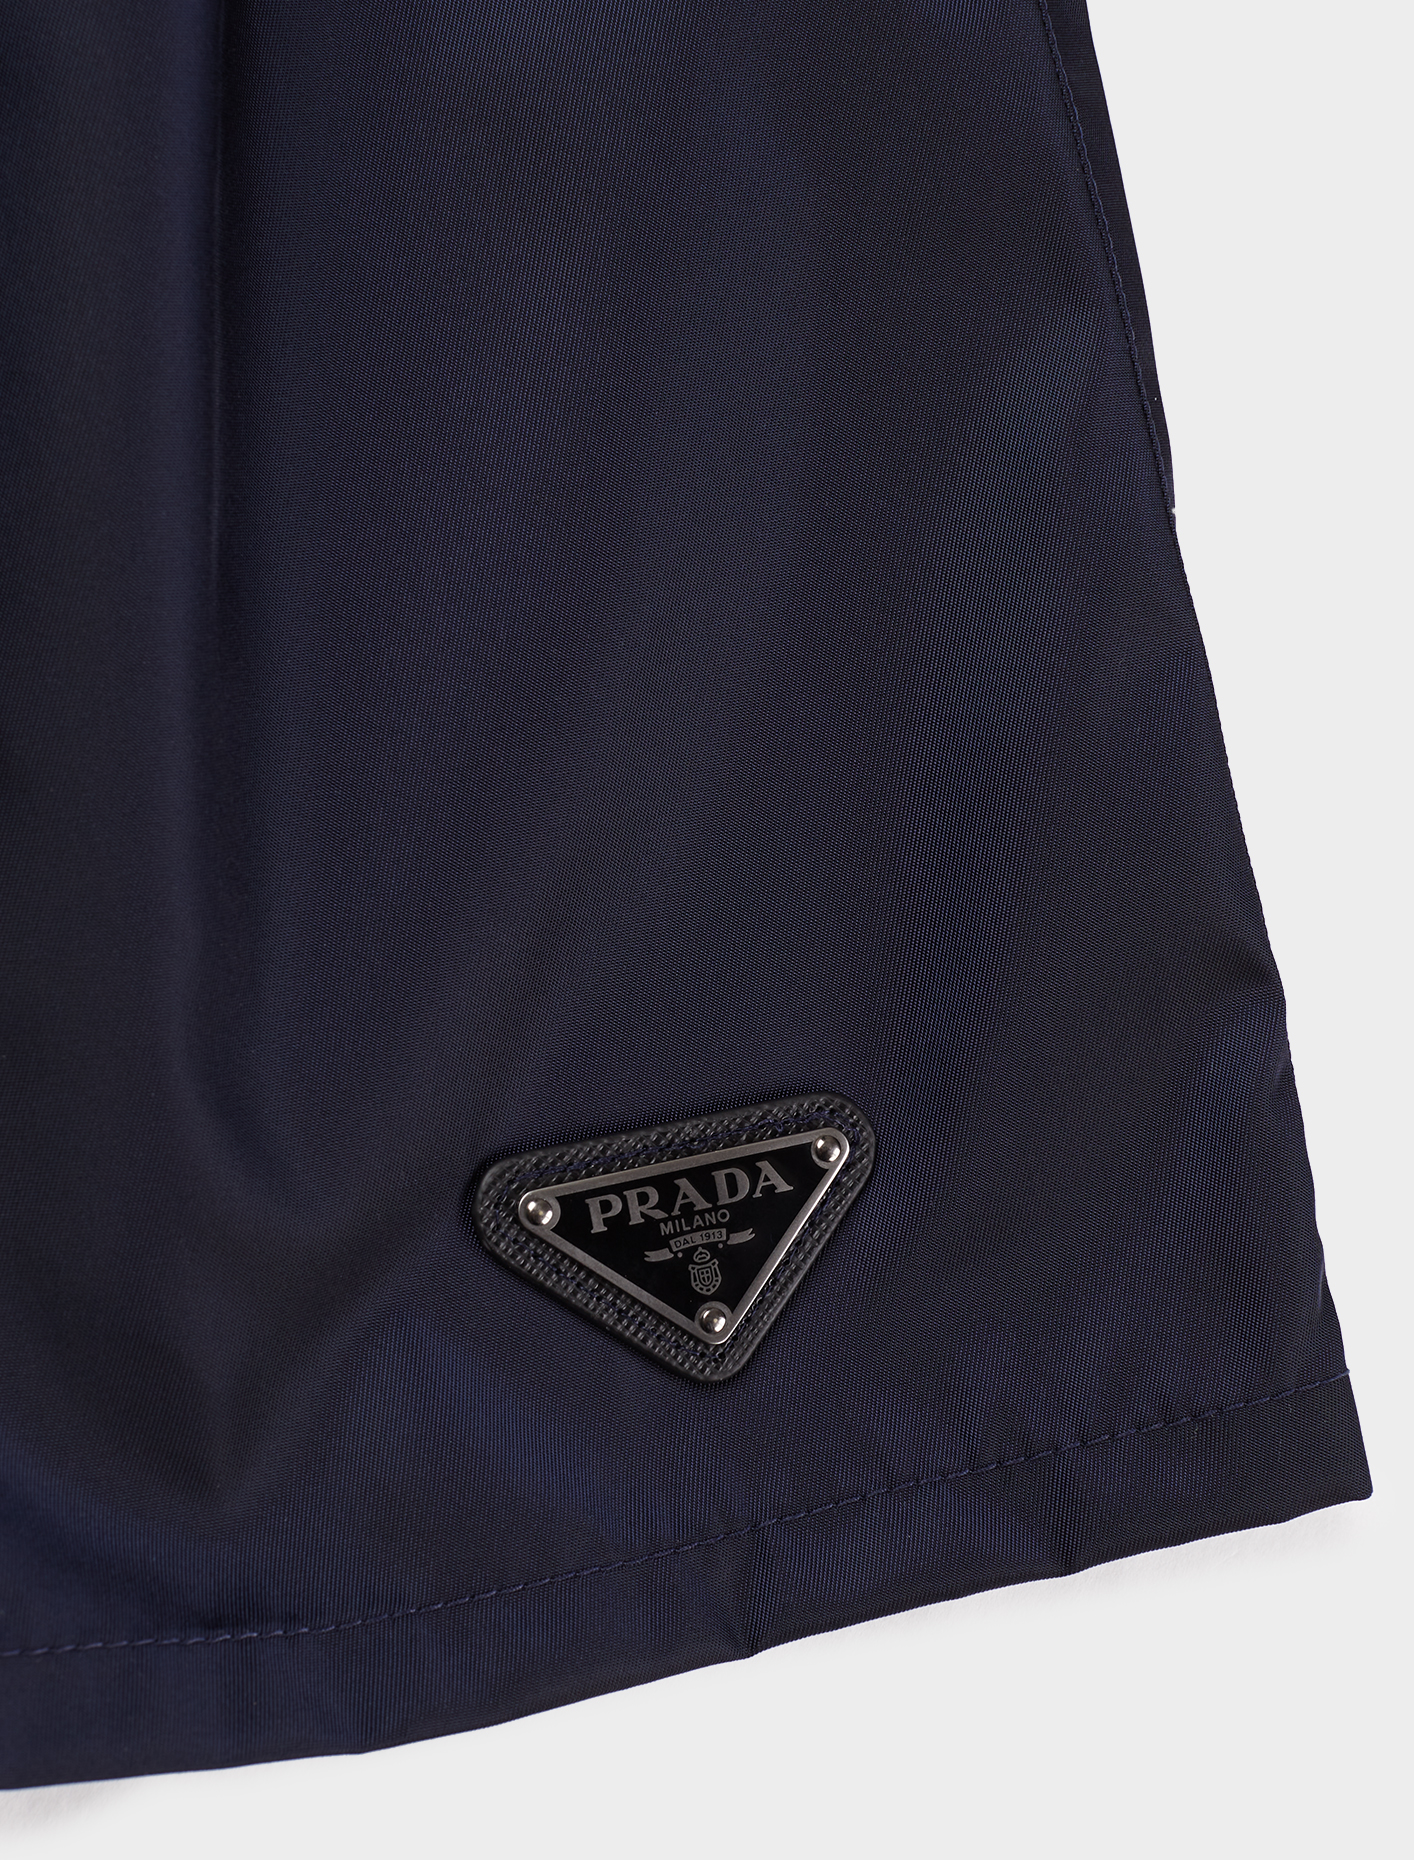 Prada Re-Nylon Shorts in Blue | Voo Store Berlin | Worldwide Shipping